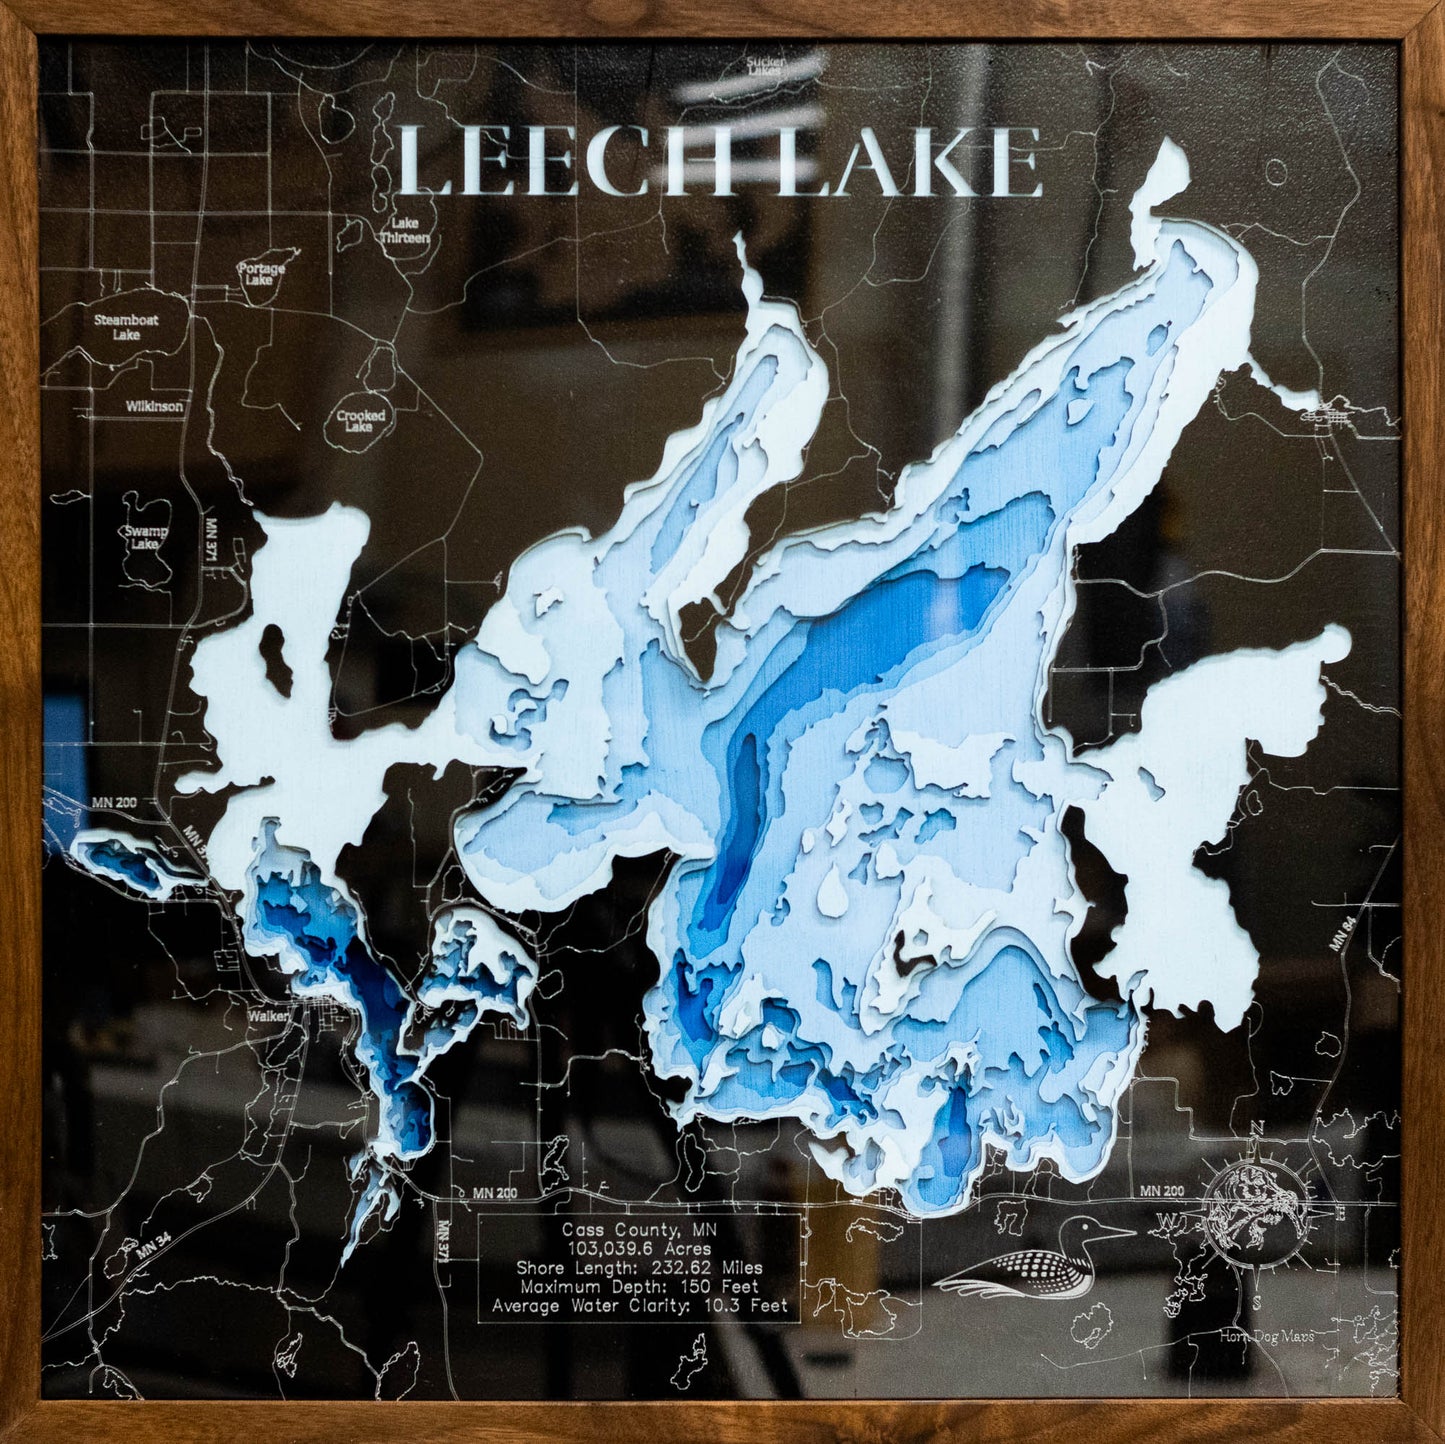 Leech Lake in Cass County, MN